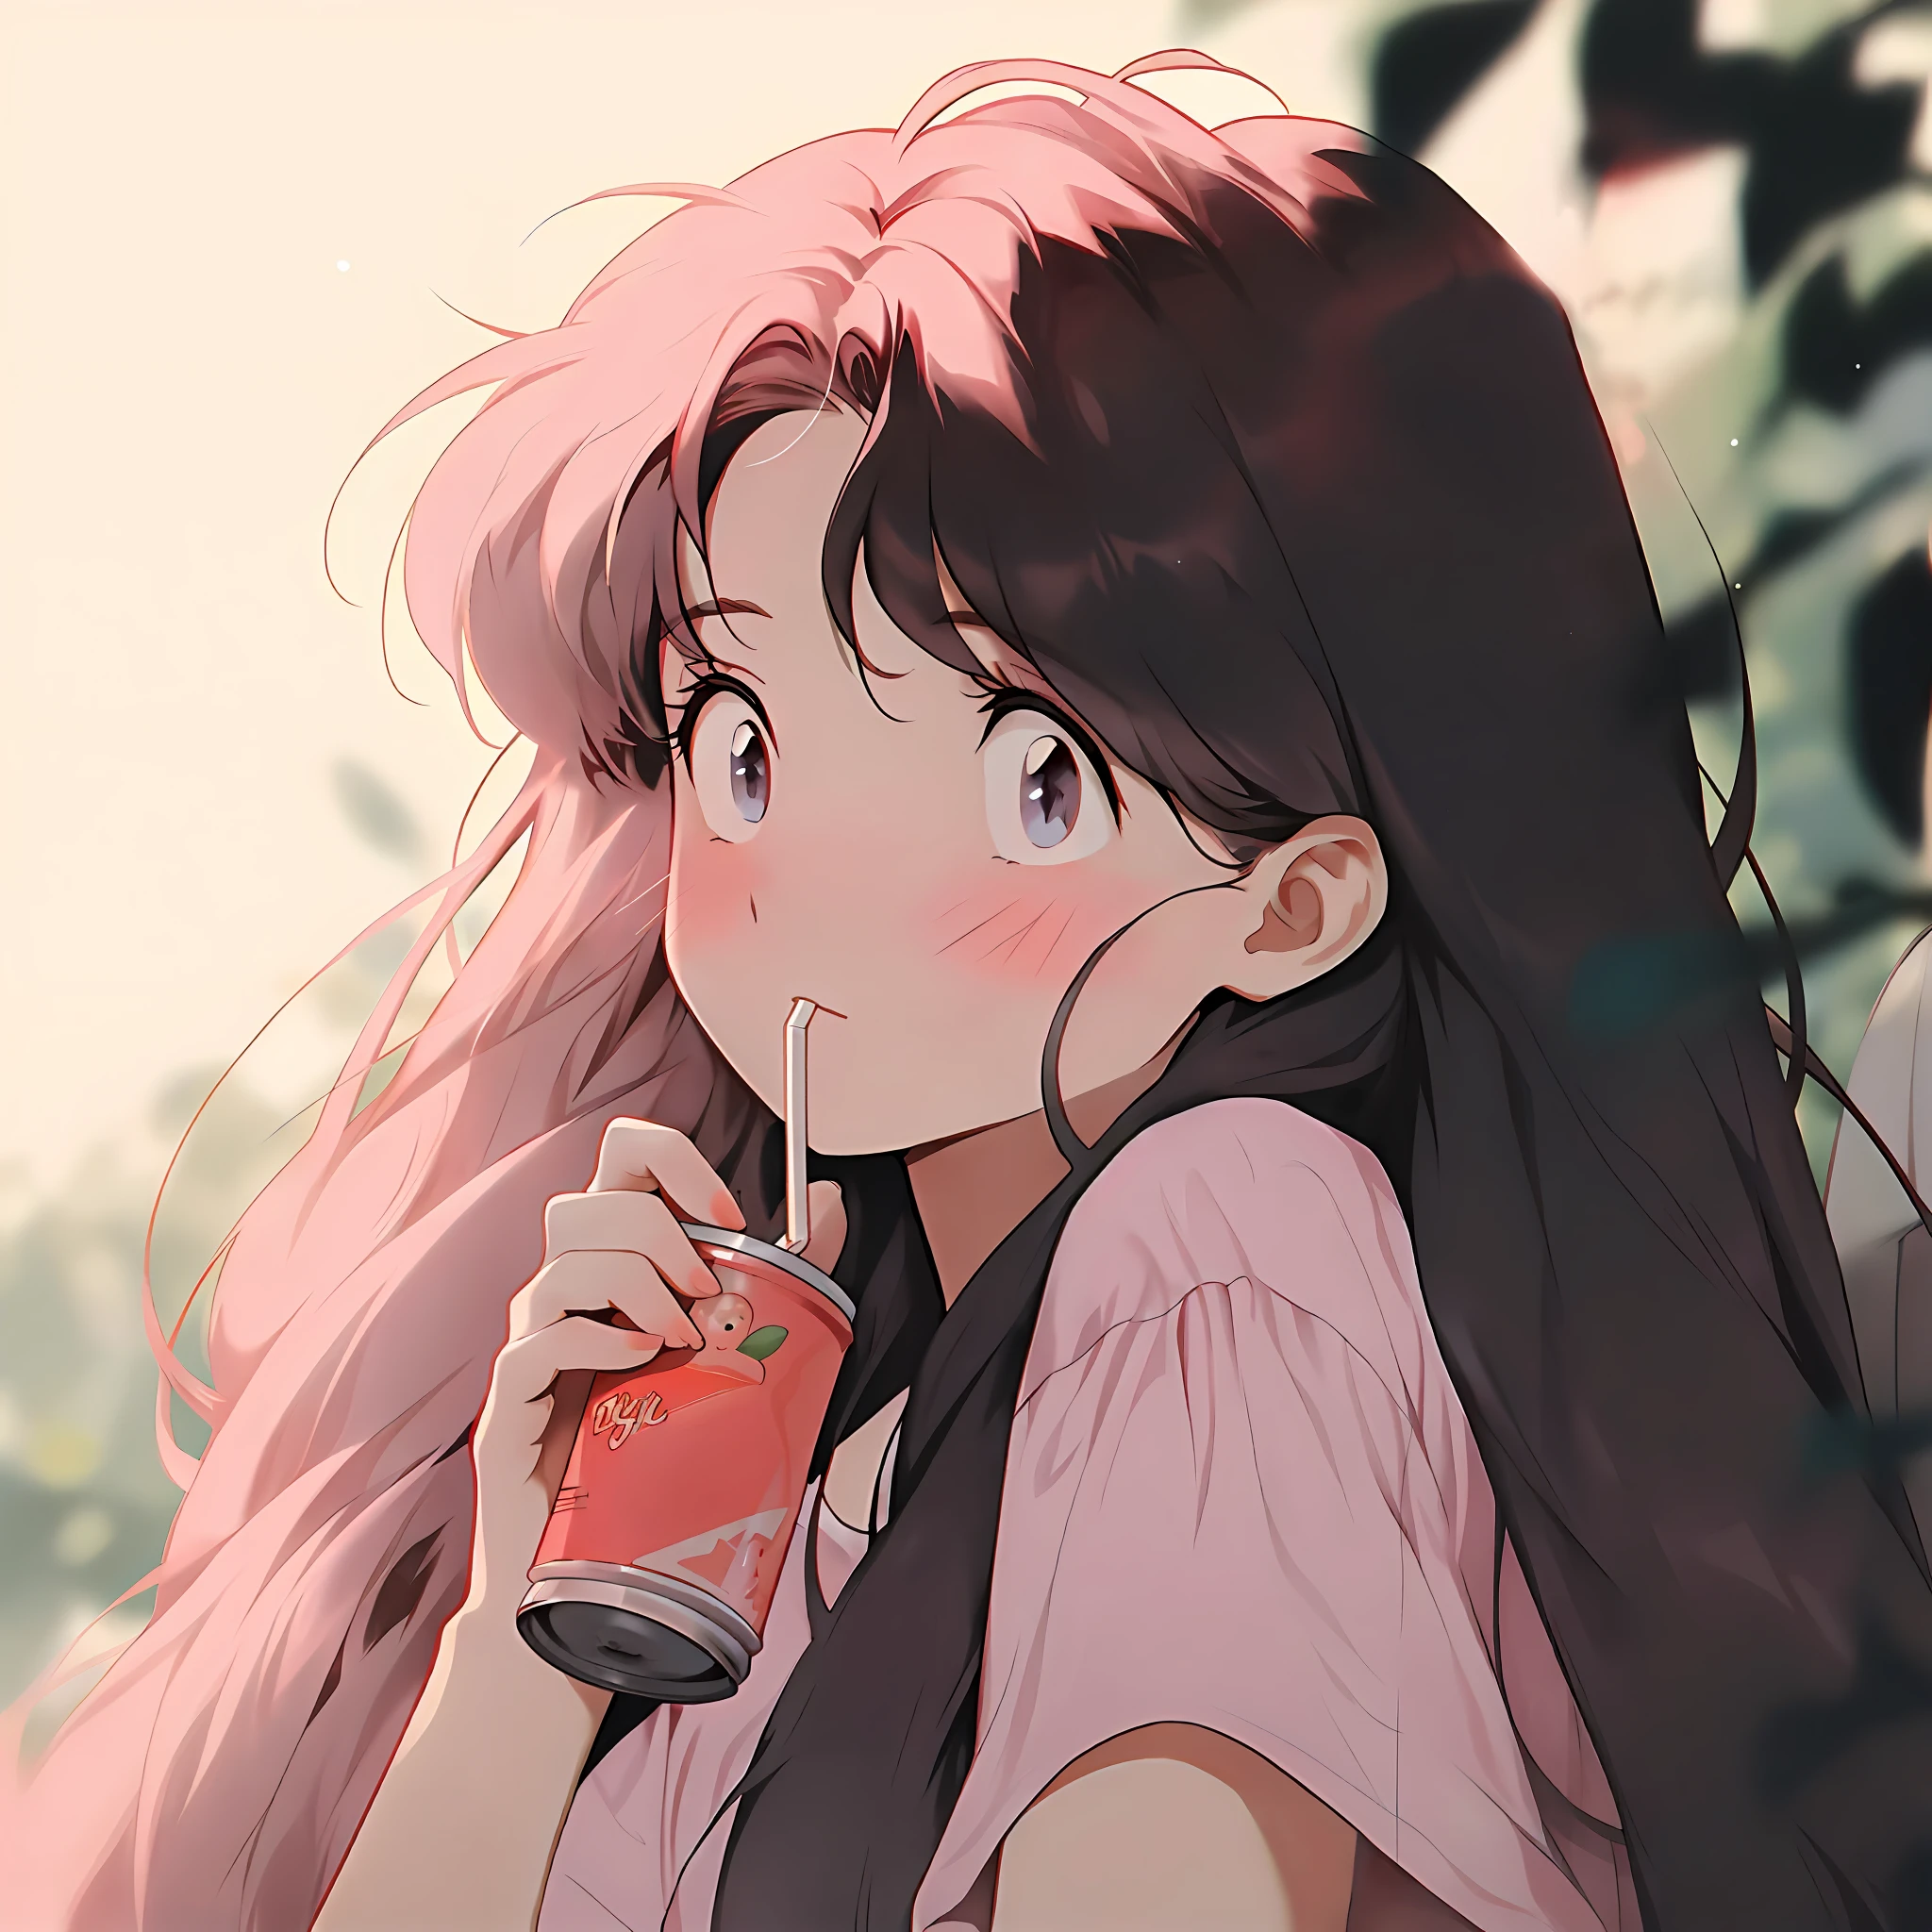 Anime kawaii drink by NonaBad5 on DeviantArt